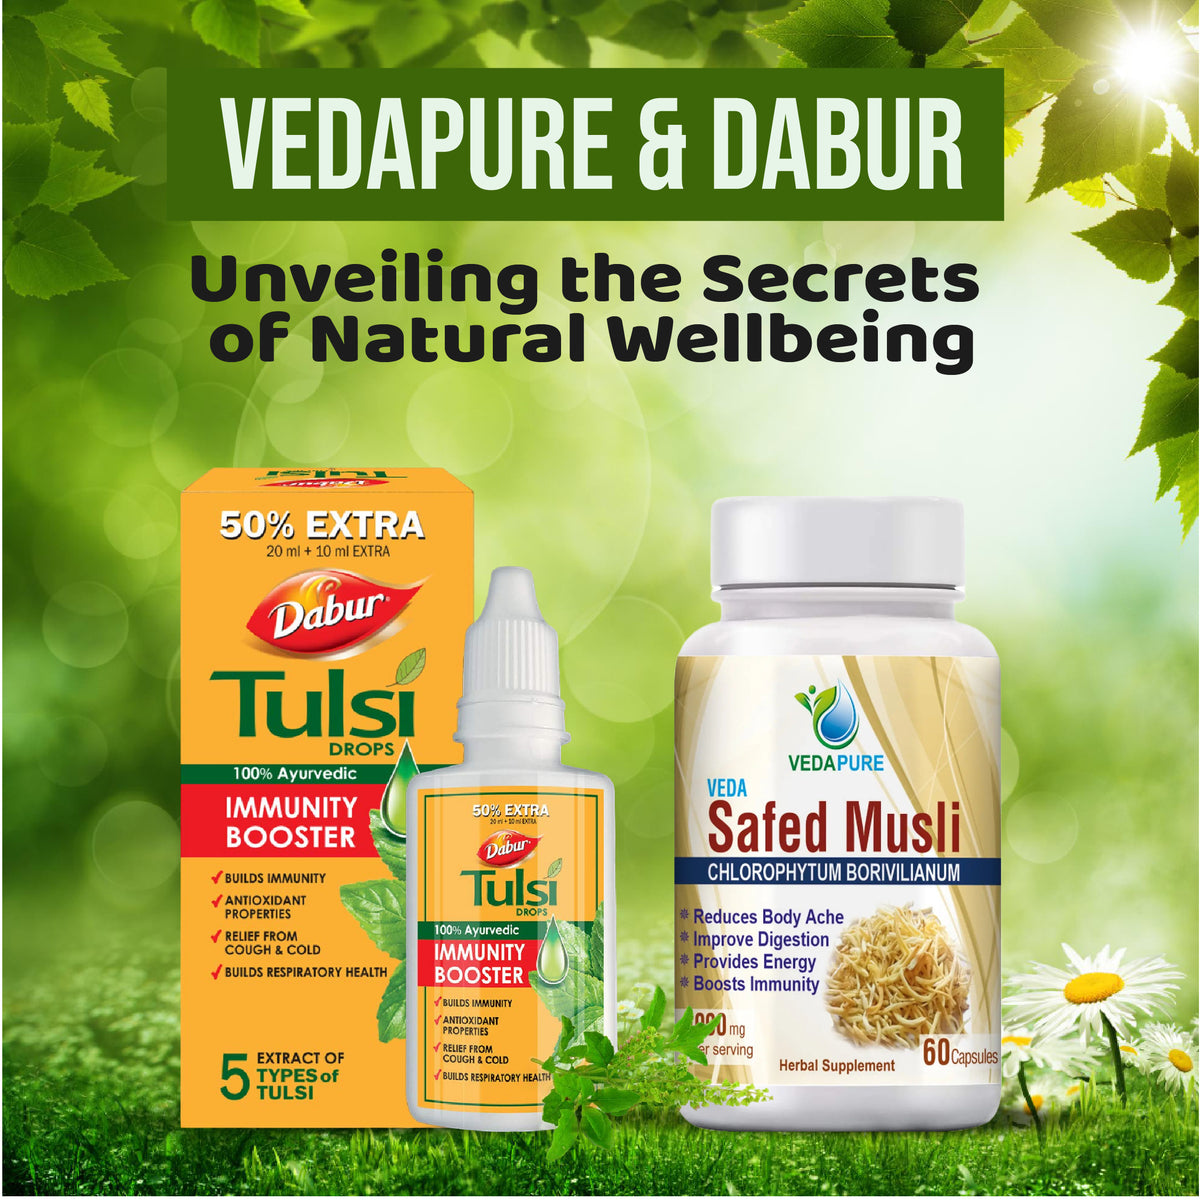 Dabur Tulsi Drops + Vedapure Safed Musli capsule